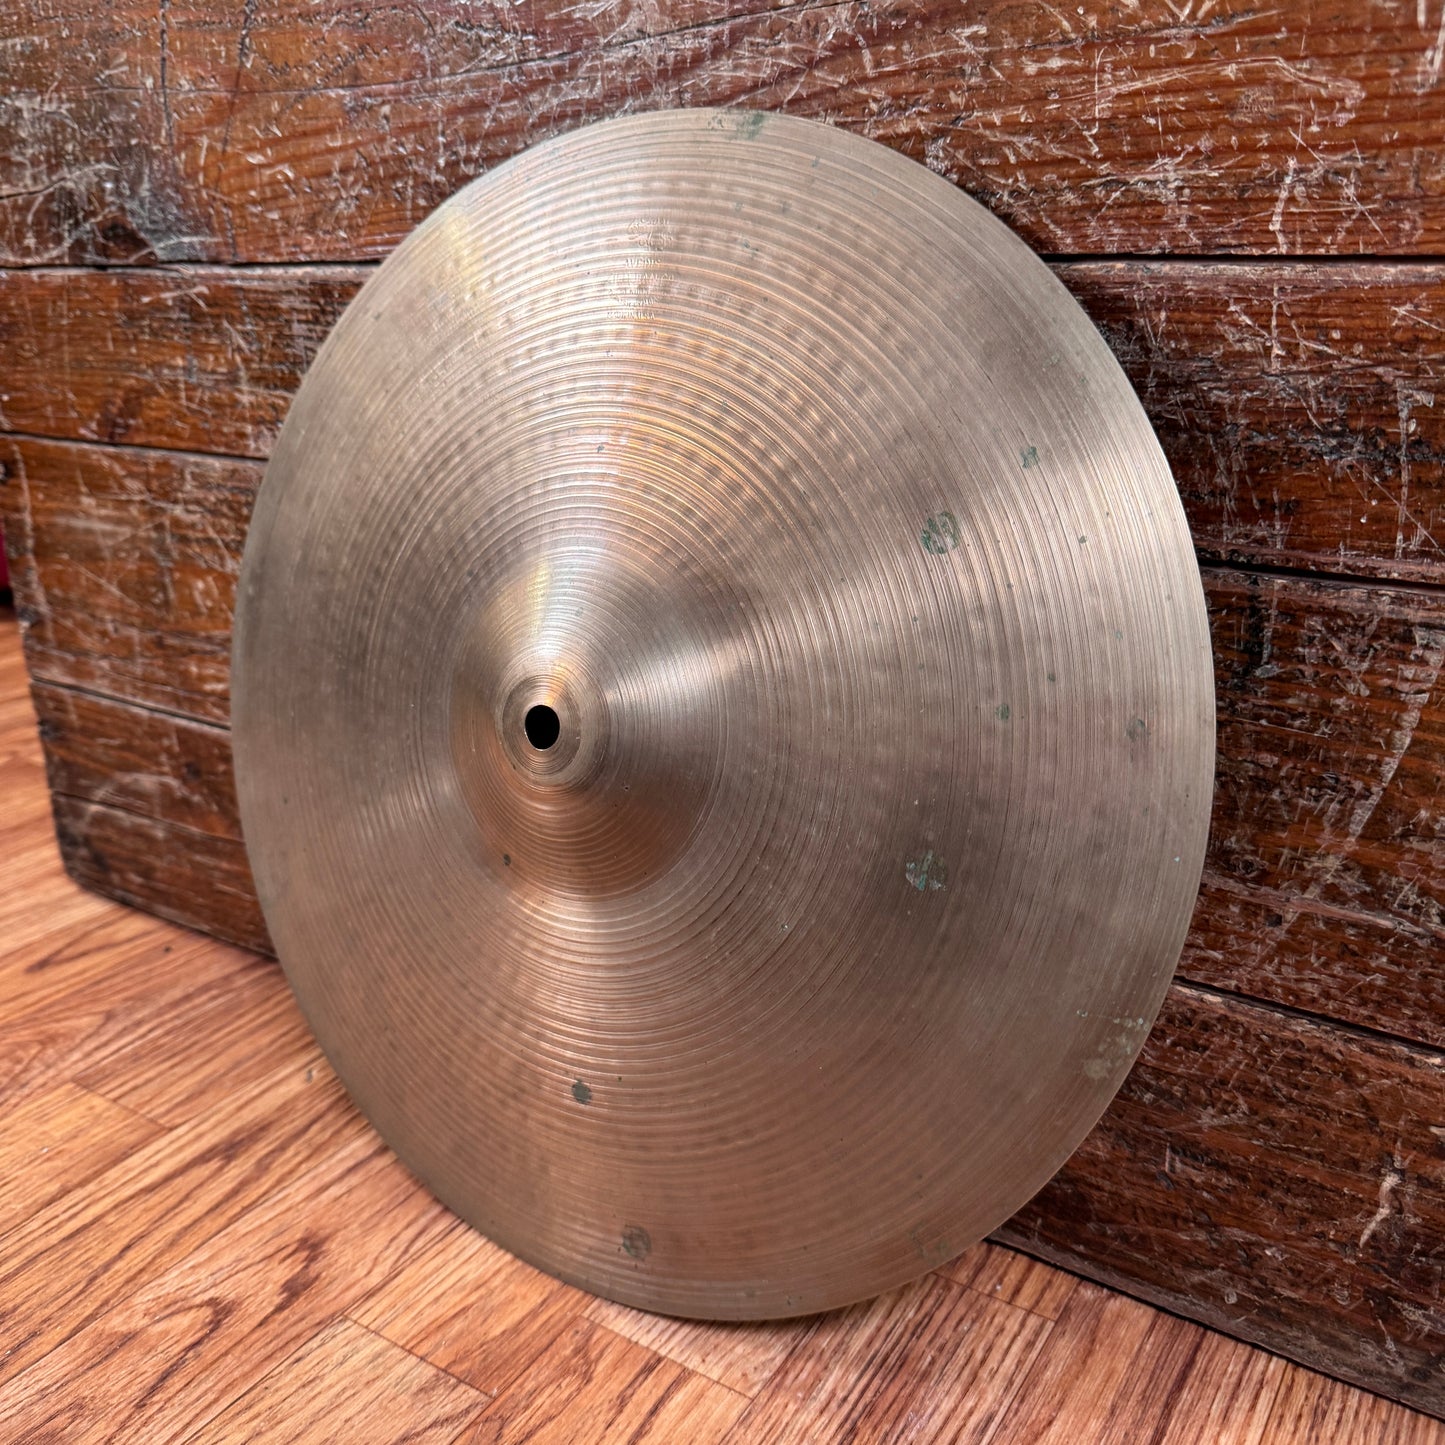 14" Zildjian A 1970s New Beat Hi-Hat Cymbal Pair 898g/1382g *Video Demo*